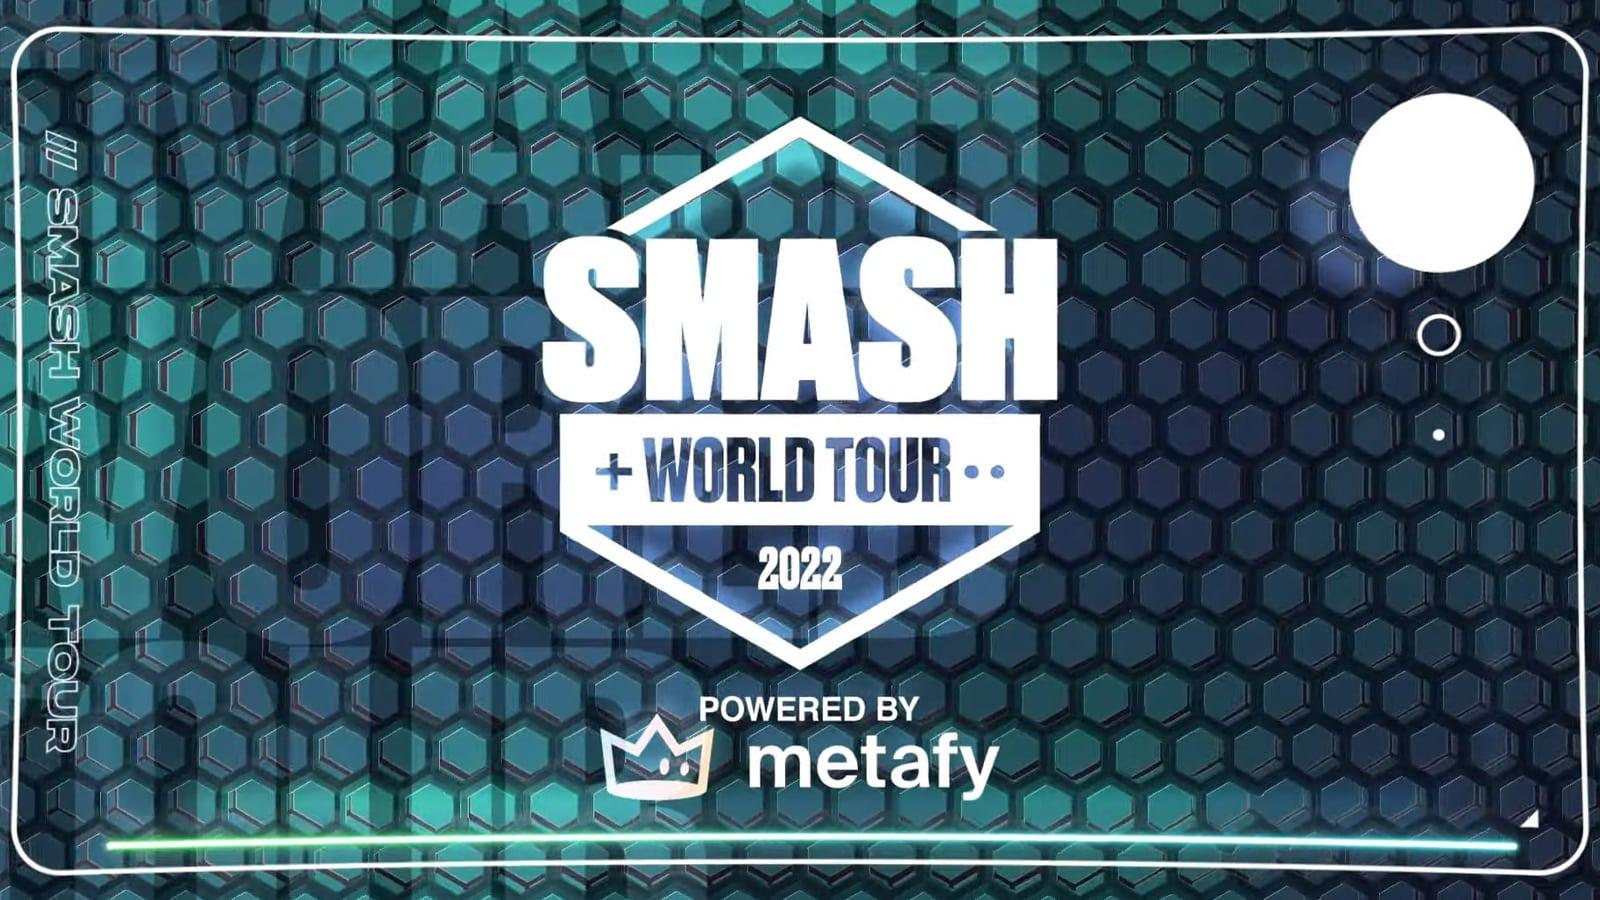 An image of Smash World Tour 2022, a smash bros competition